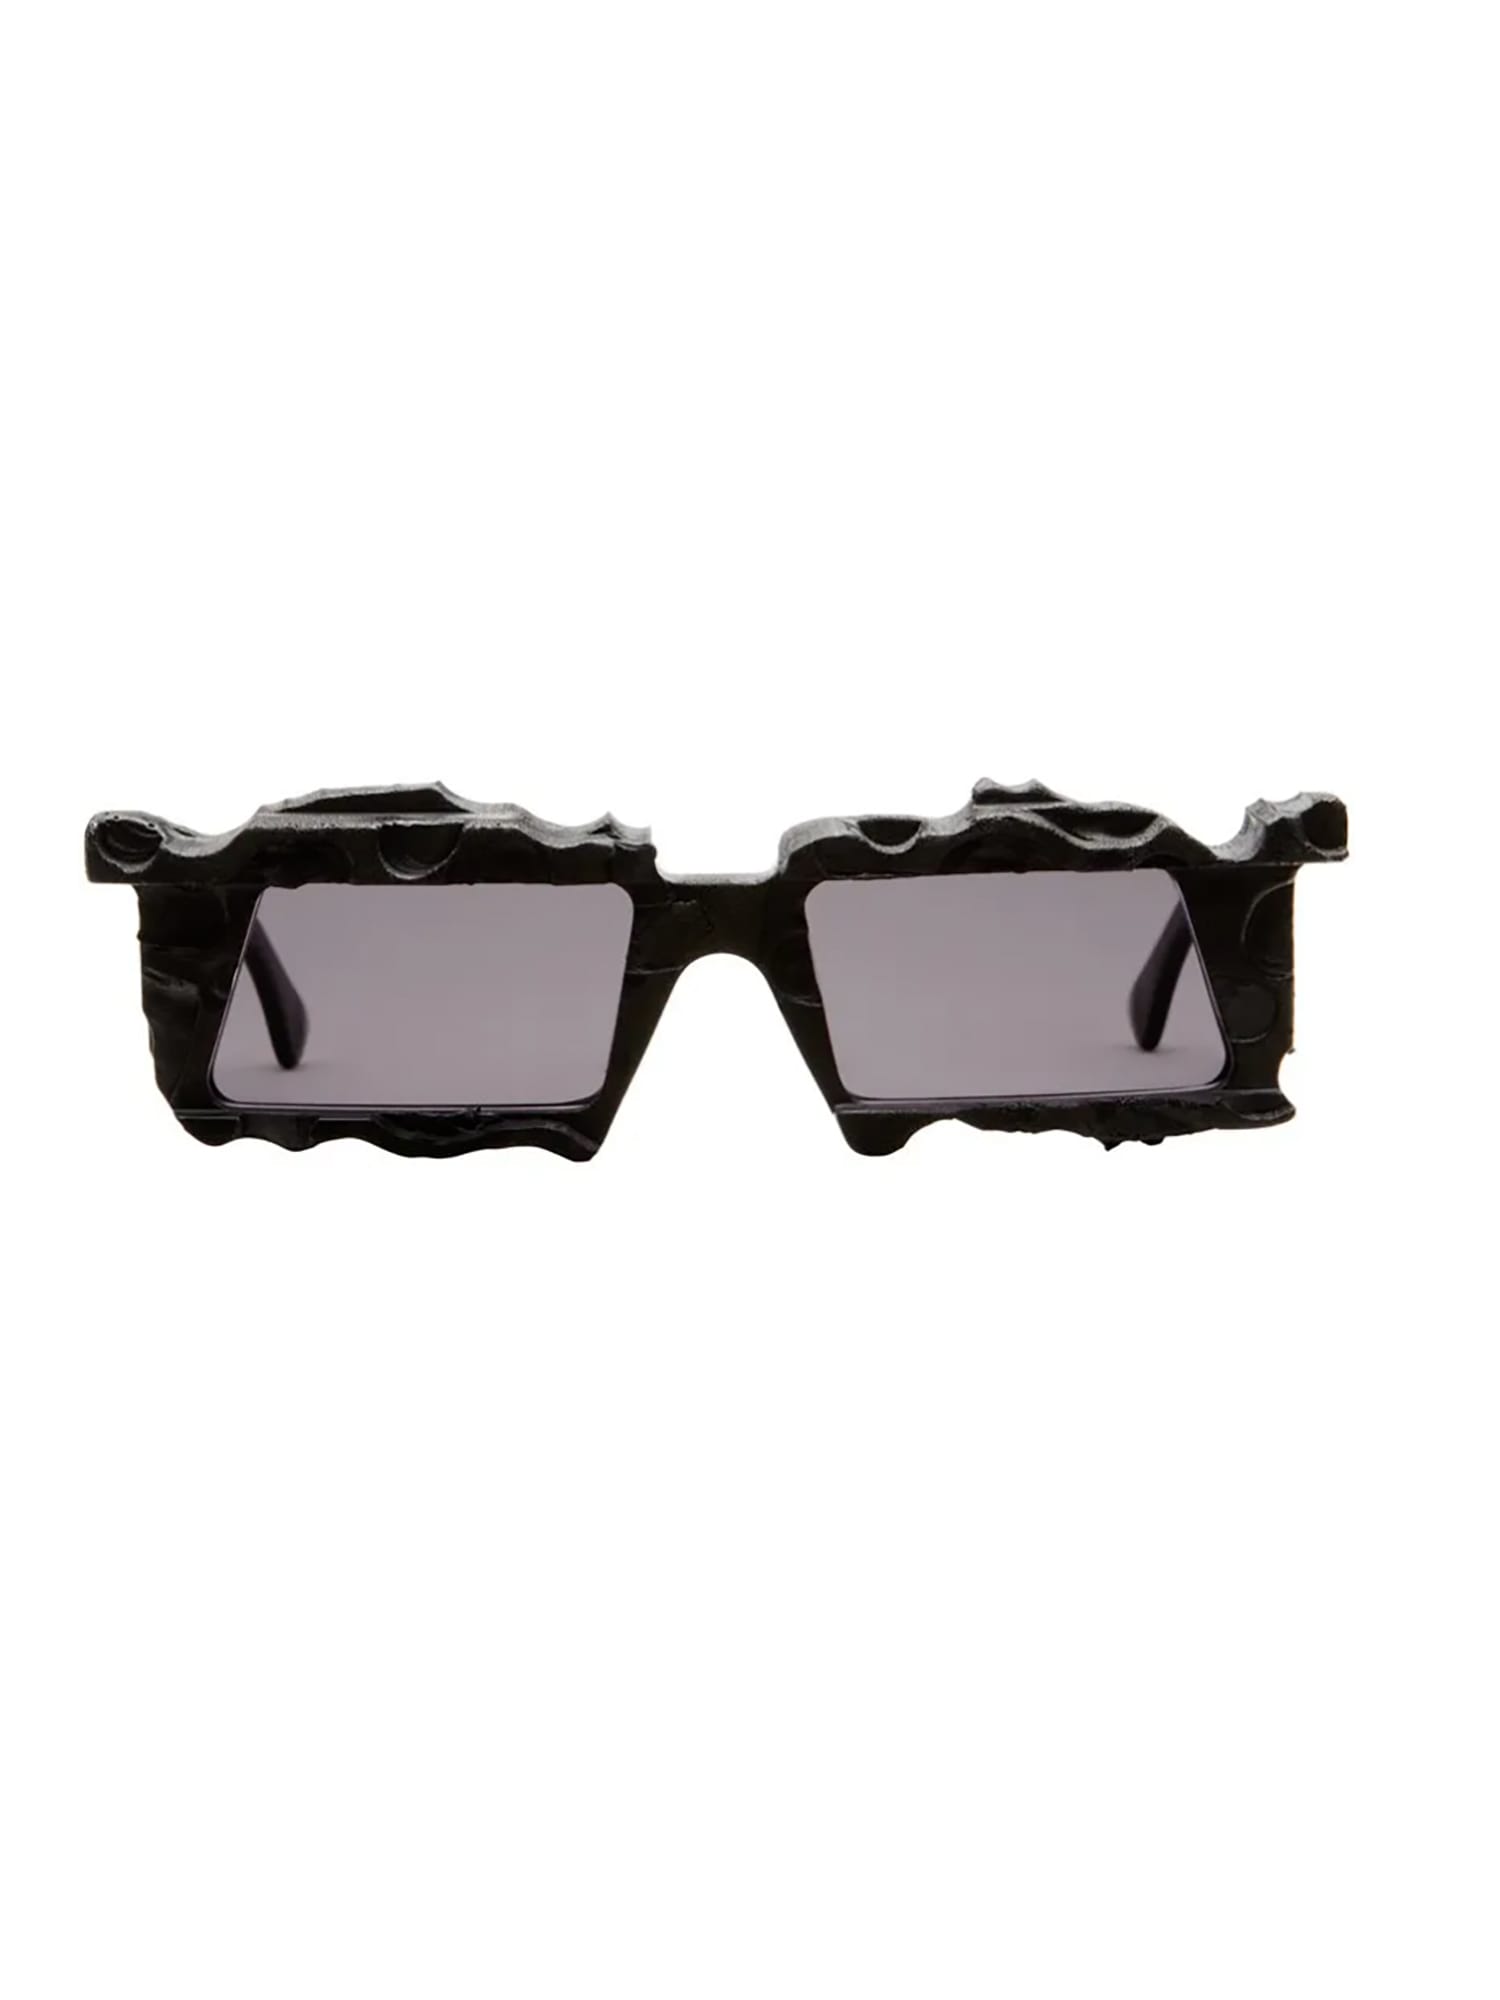 X20 Sunglasses